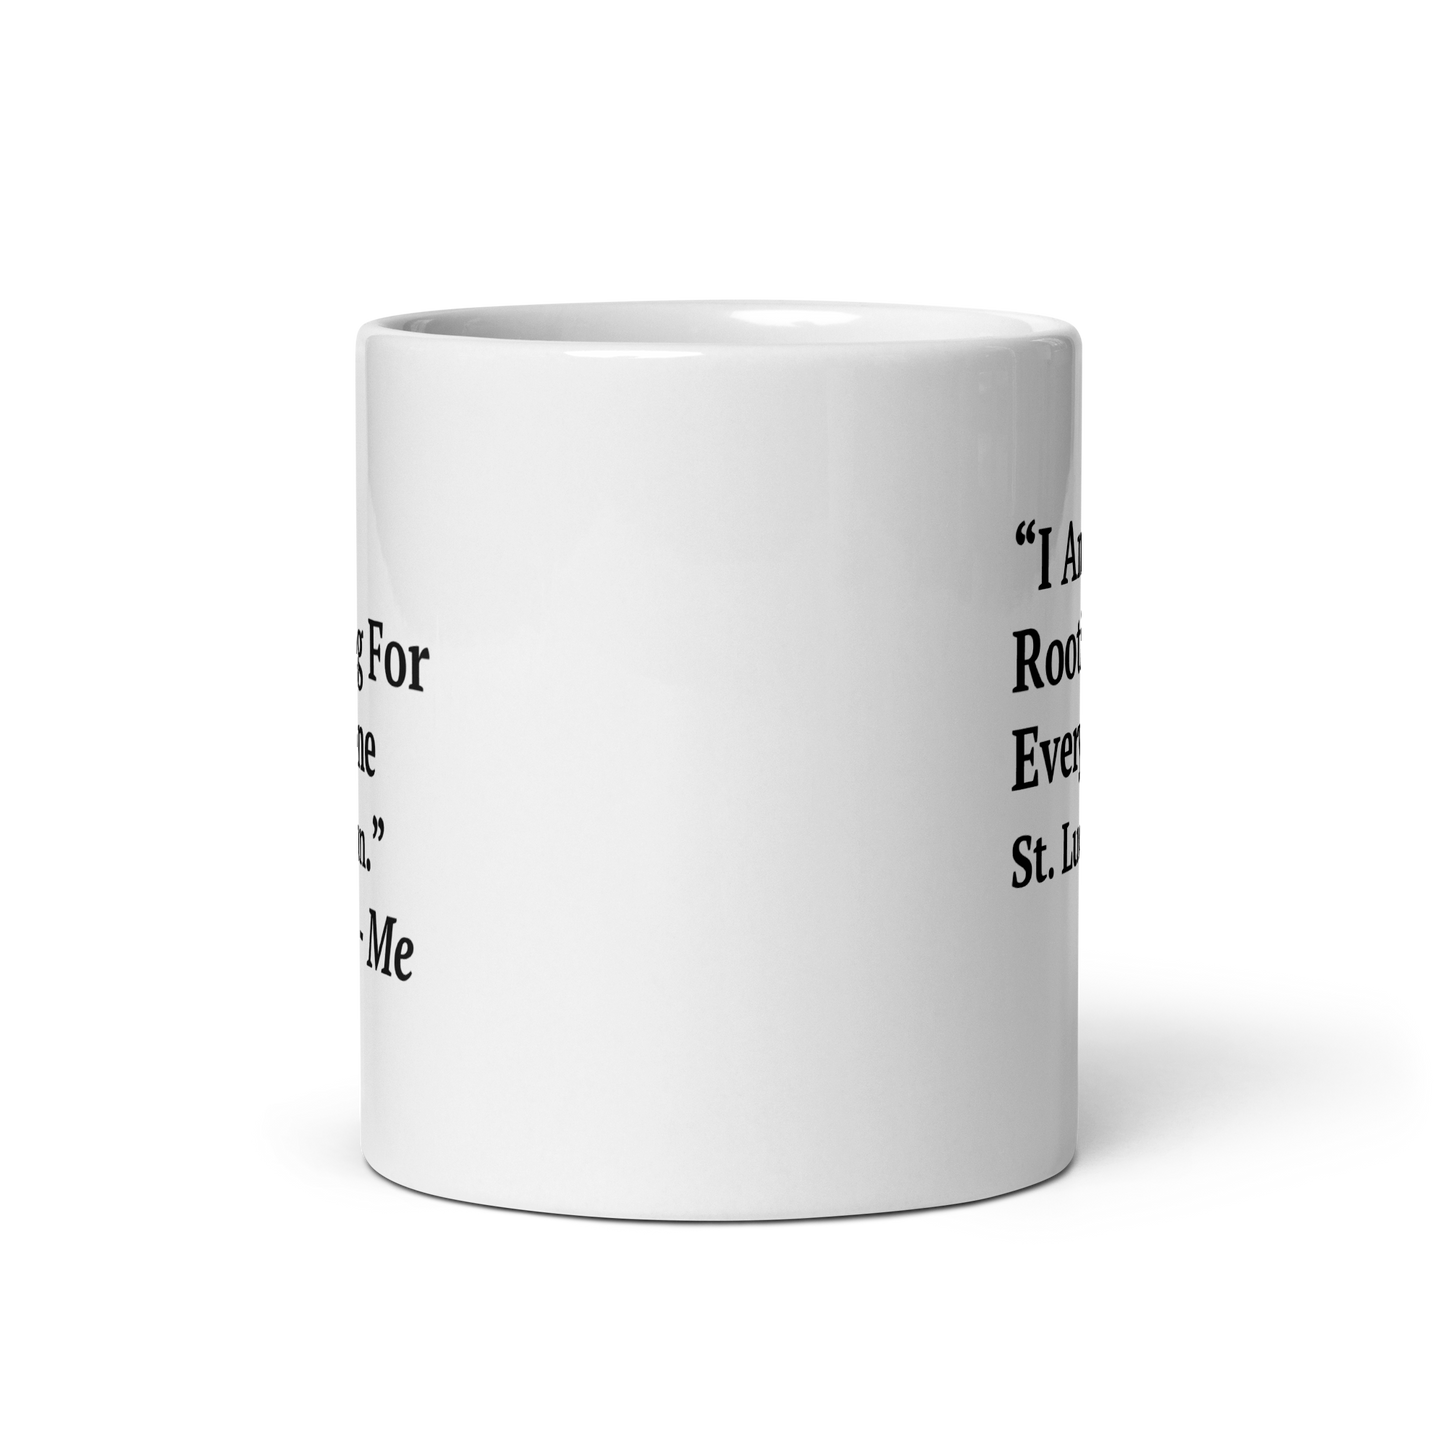 I Am Rooting: St. Lucia White glossy mug